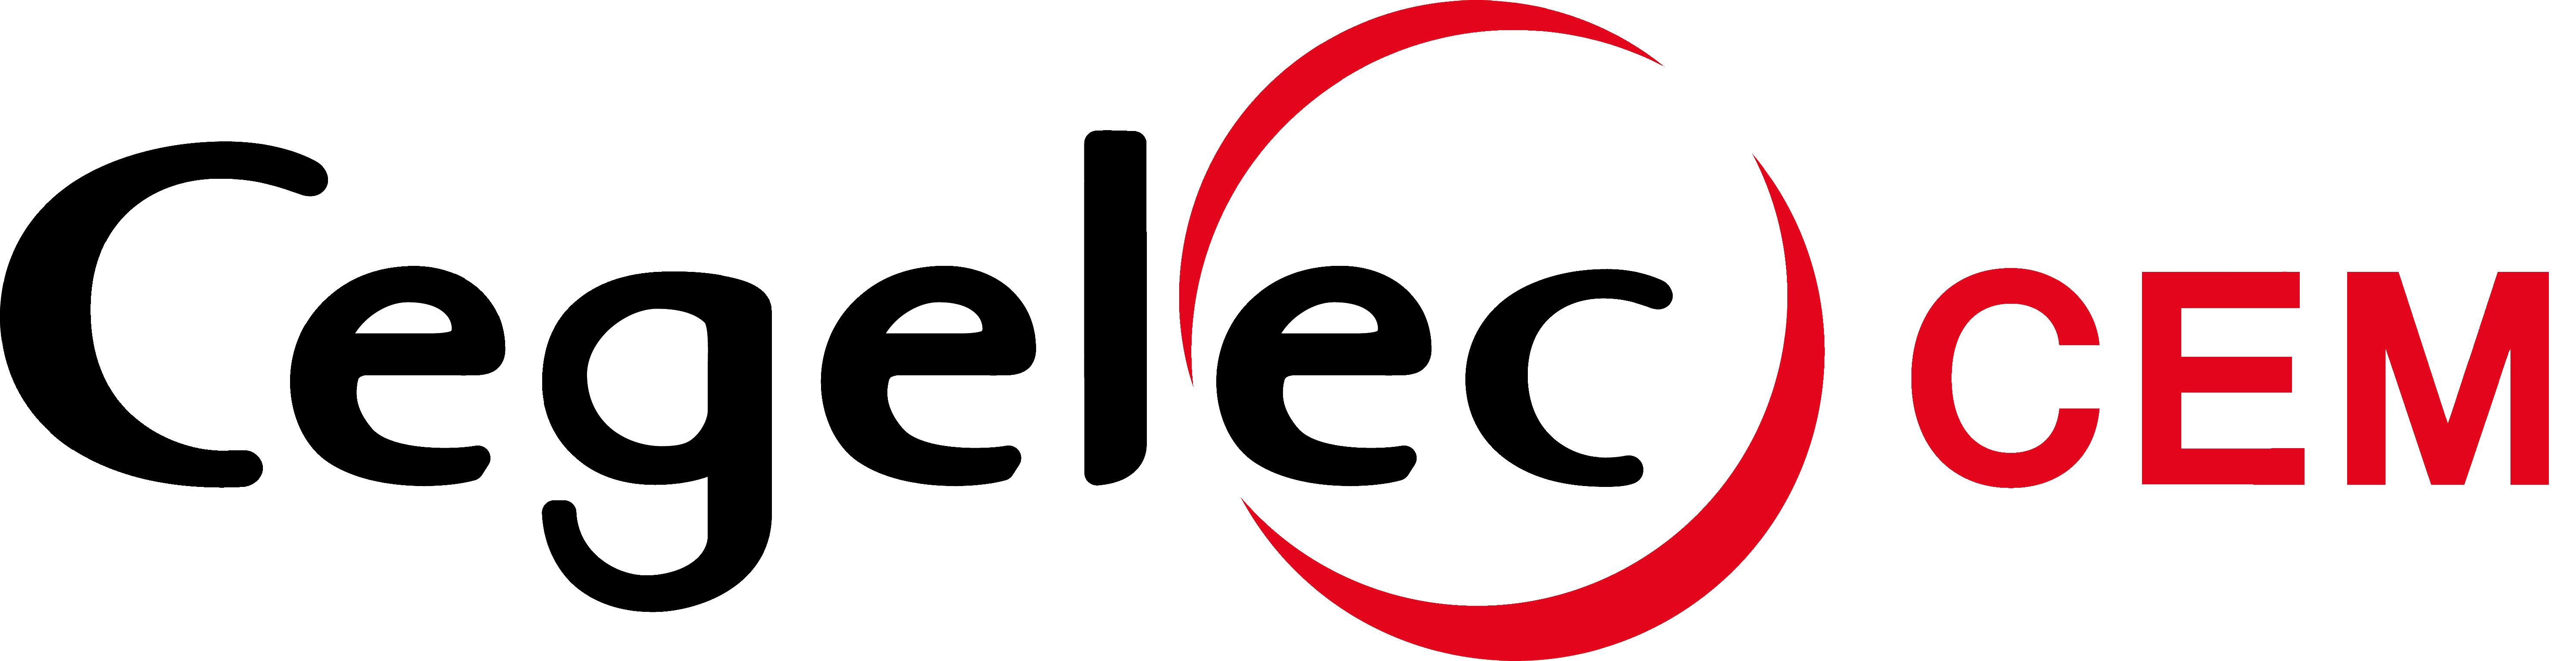 Logo CegelecCEM